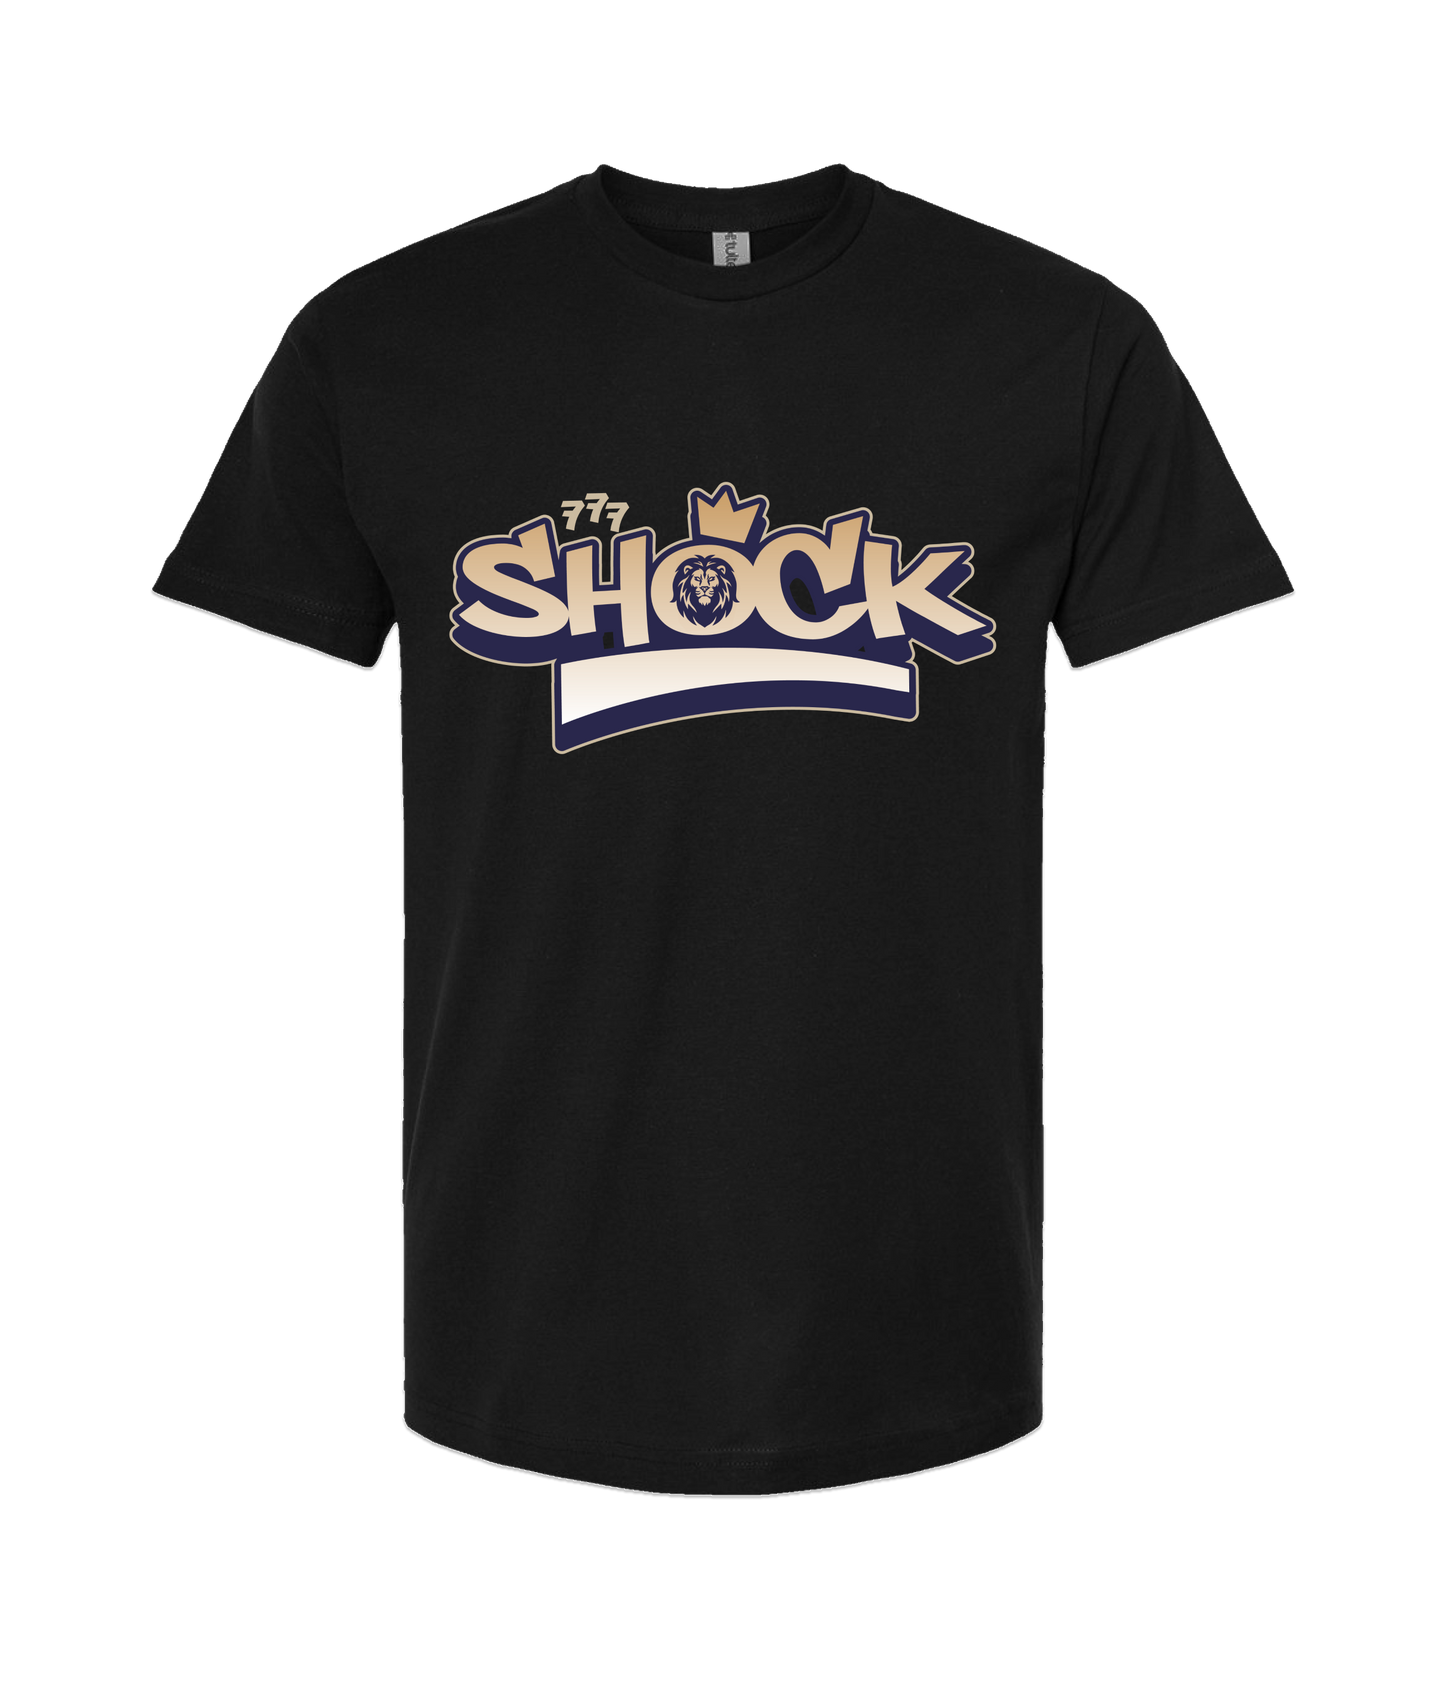 Shock - SHOCK - Black T-Shirt